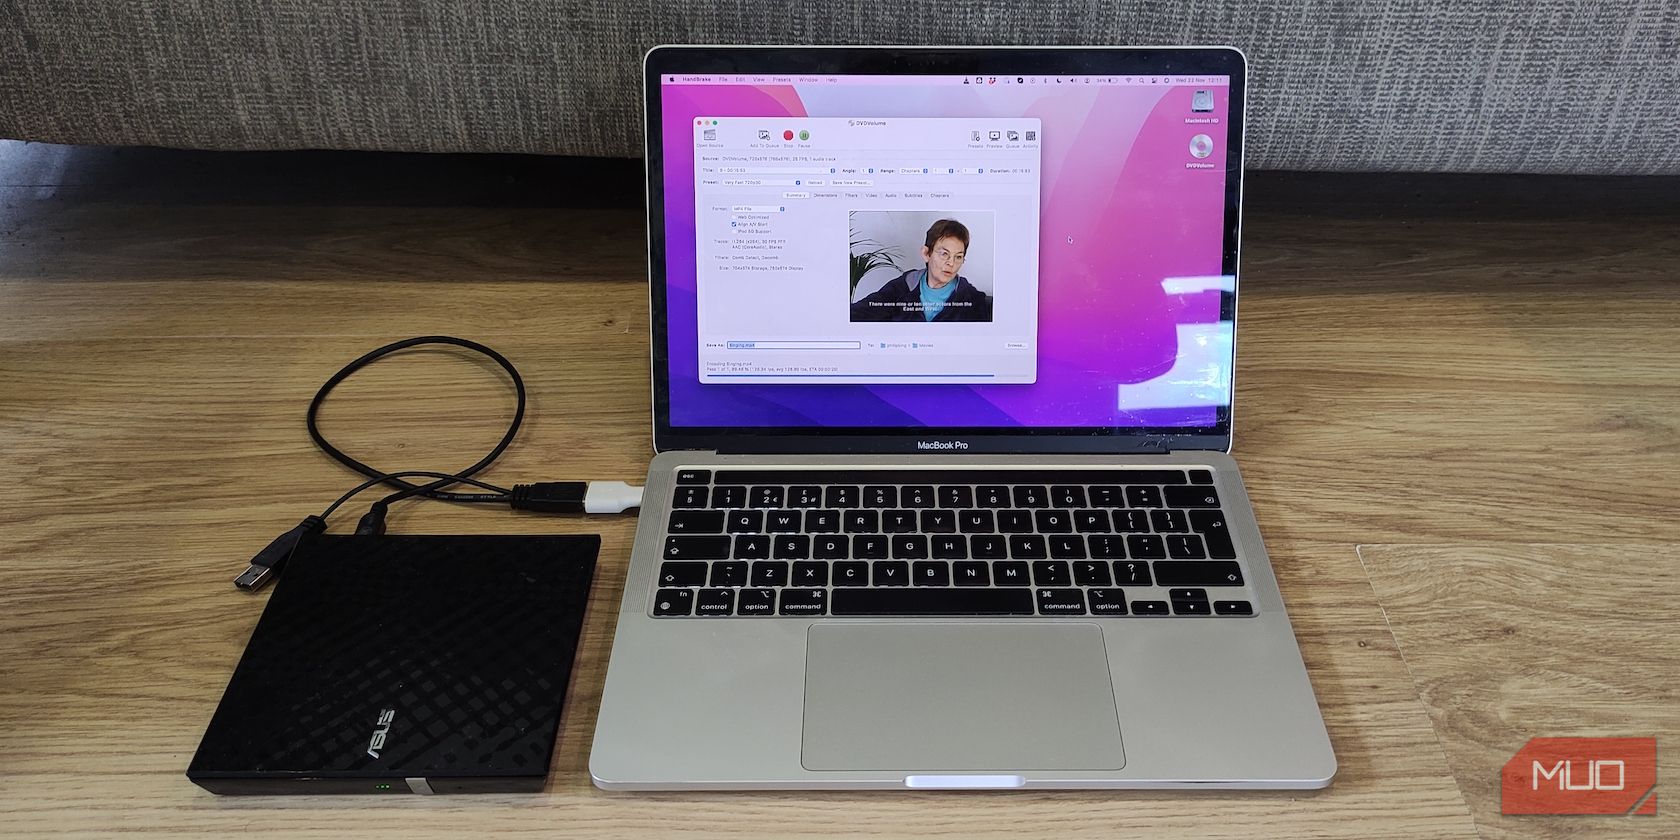 DVD drive connected to MacBook running HandBrake software